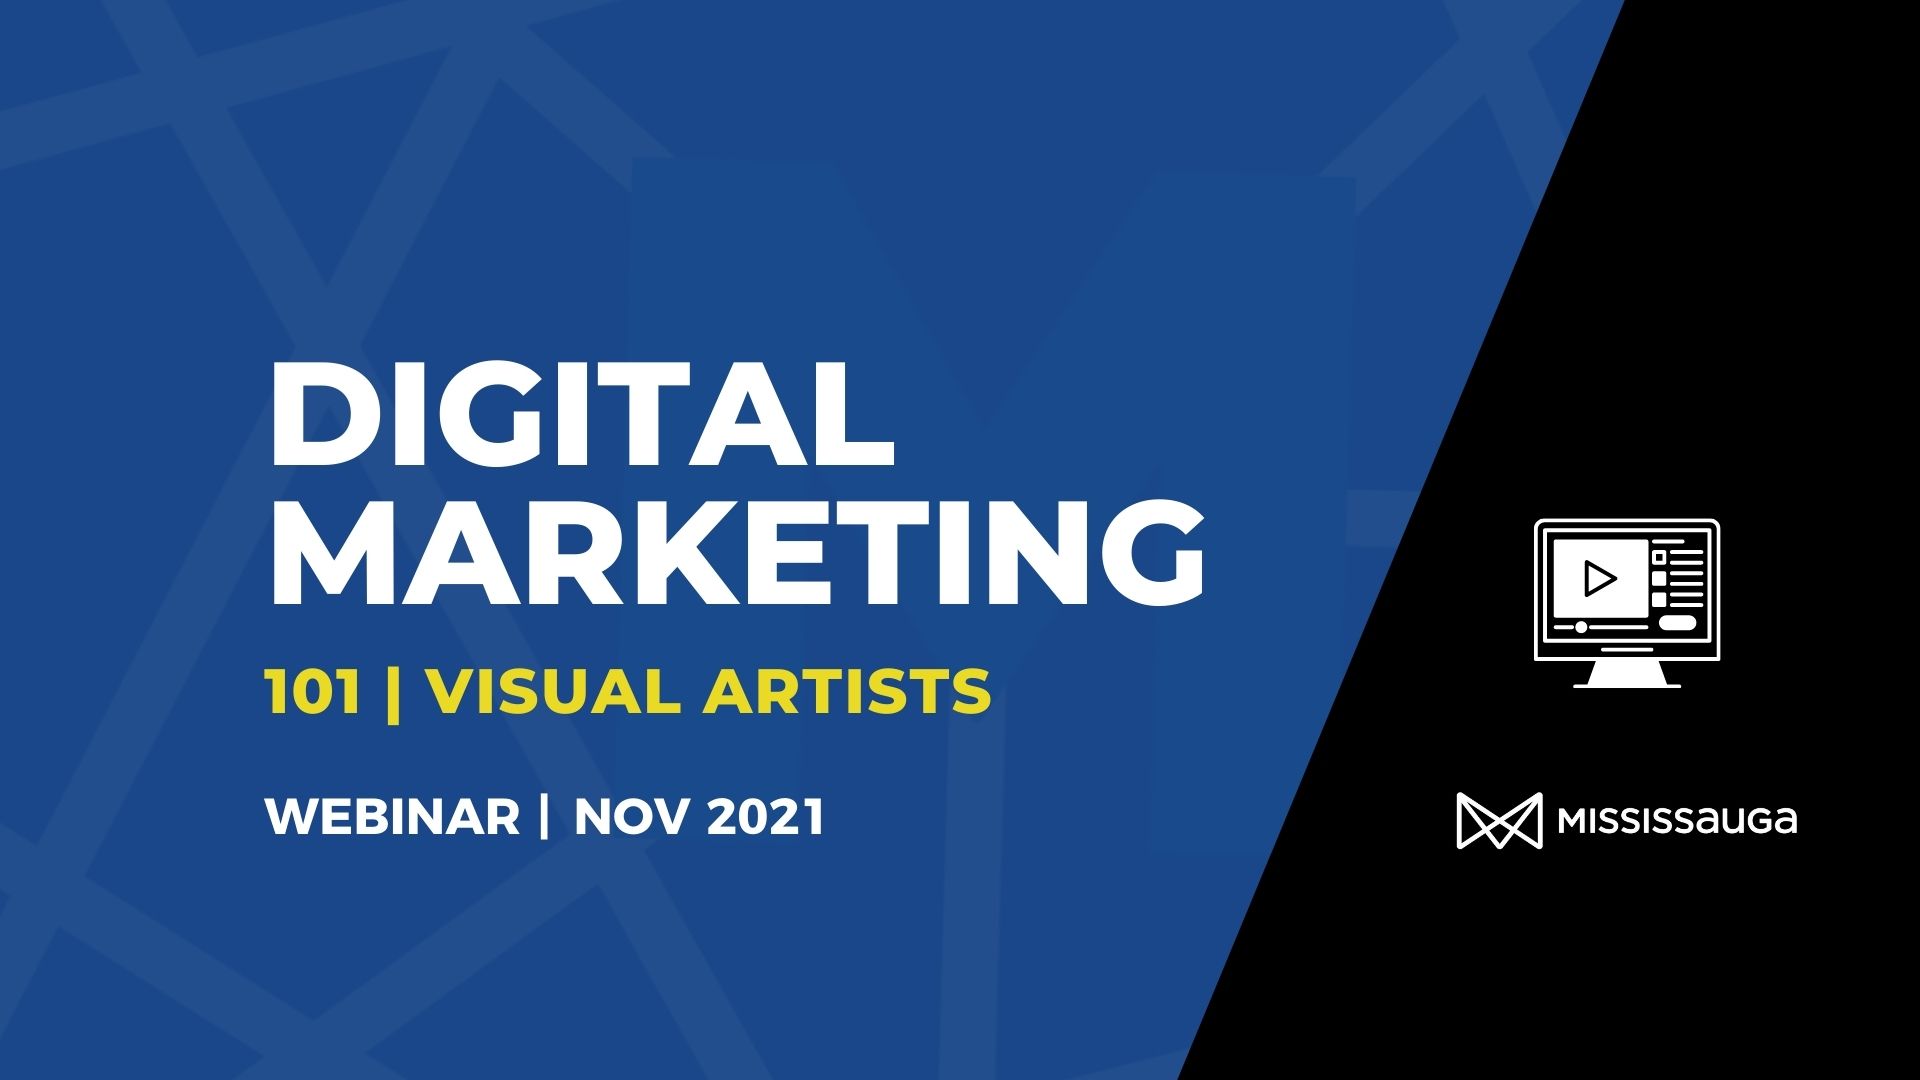 Digital Marketing for Visual Artists – Webinar Nov 2